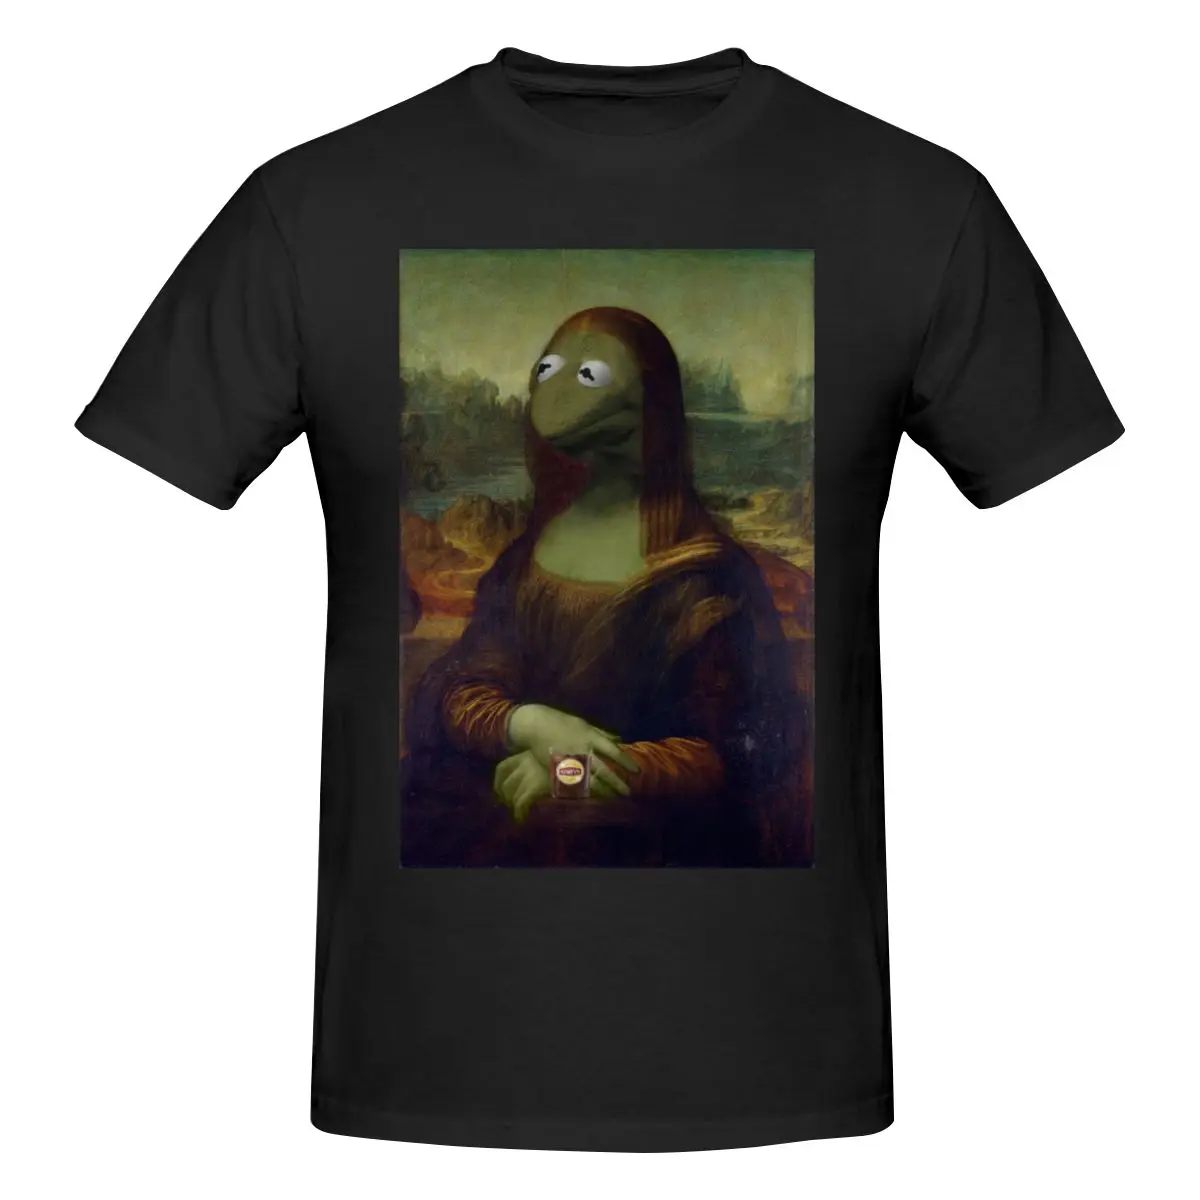 

Забавная футболка Disney Muppets Show Kermit The Frog, Хлопковая мужская футболка с круглым вырезом и короткими рукавами на заказ